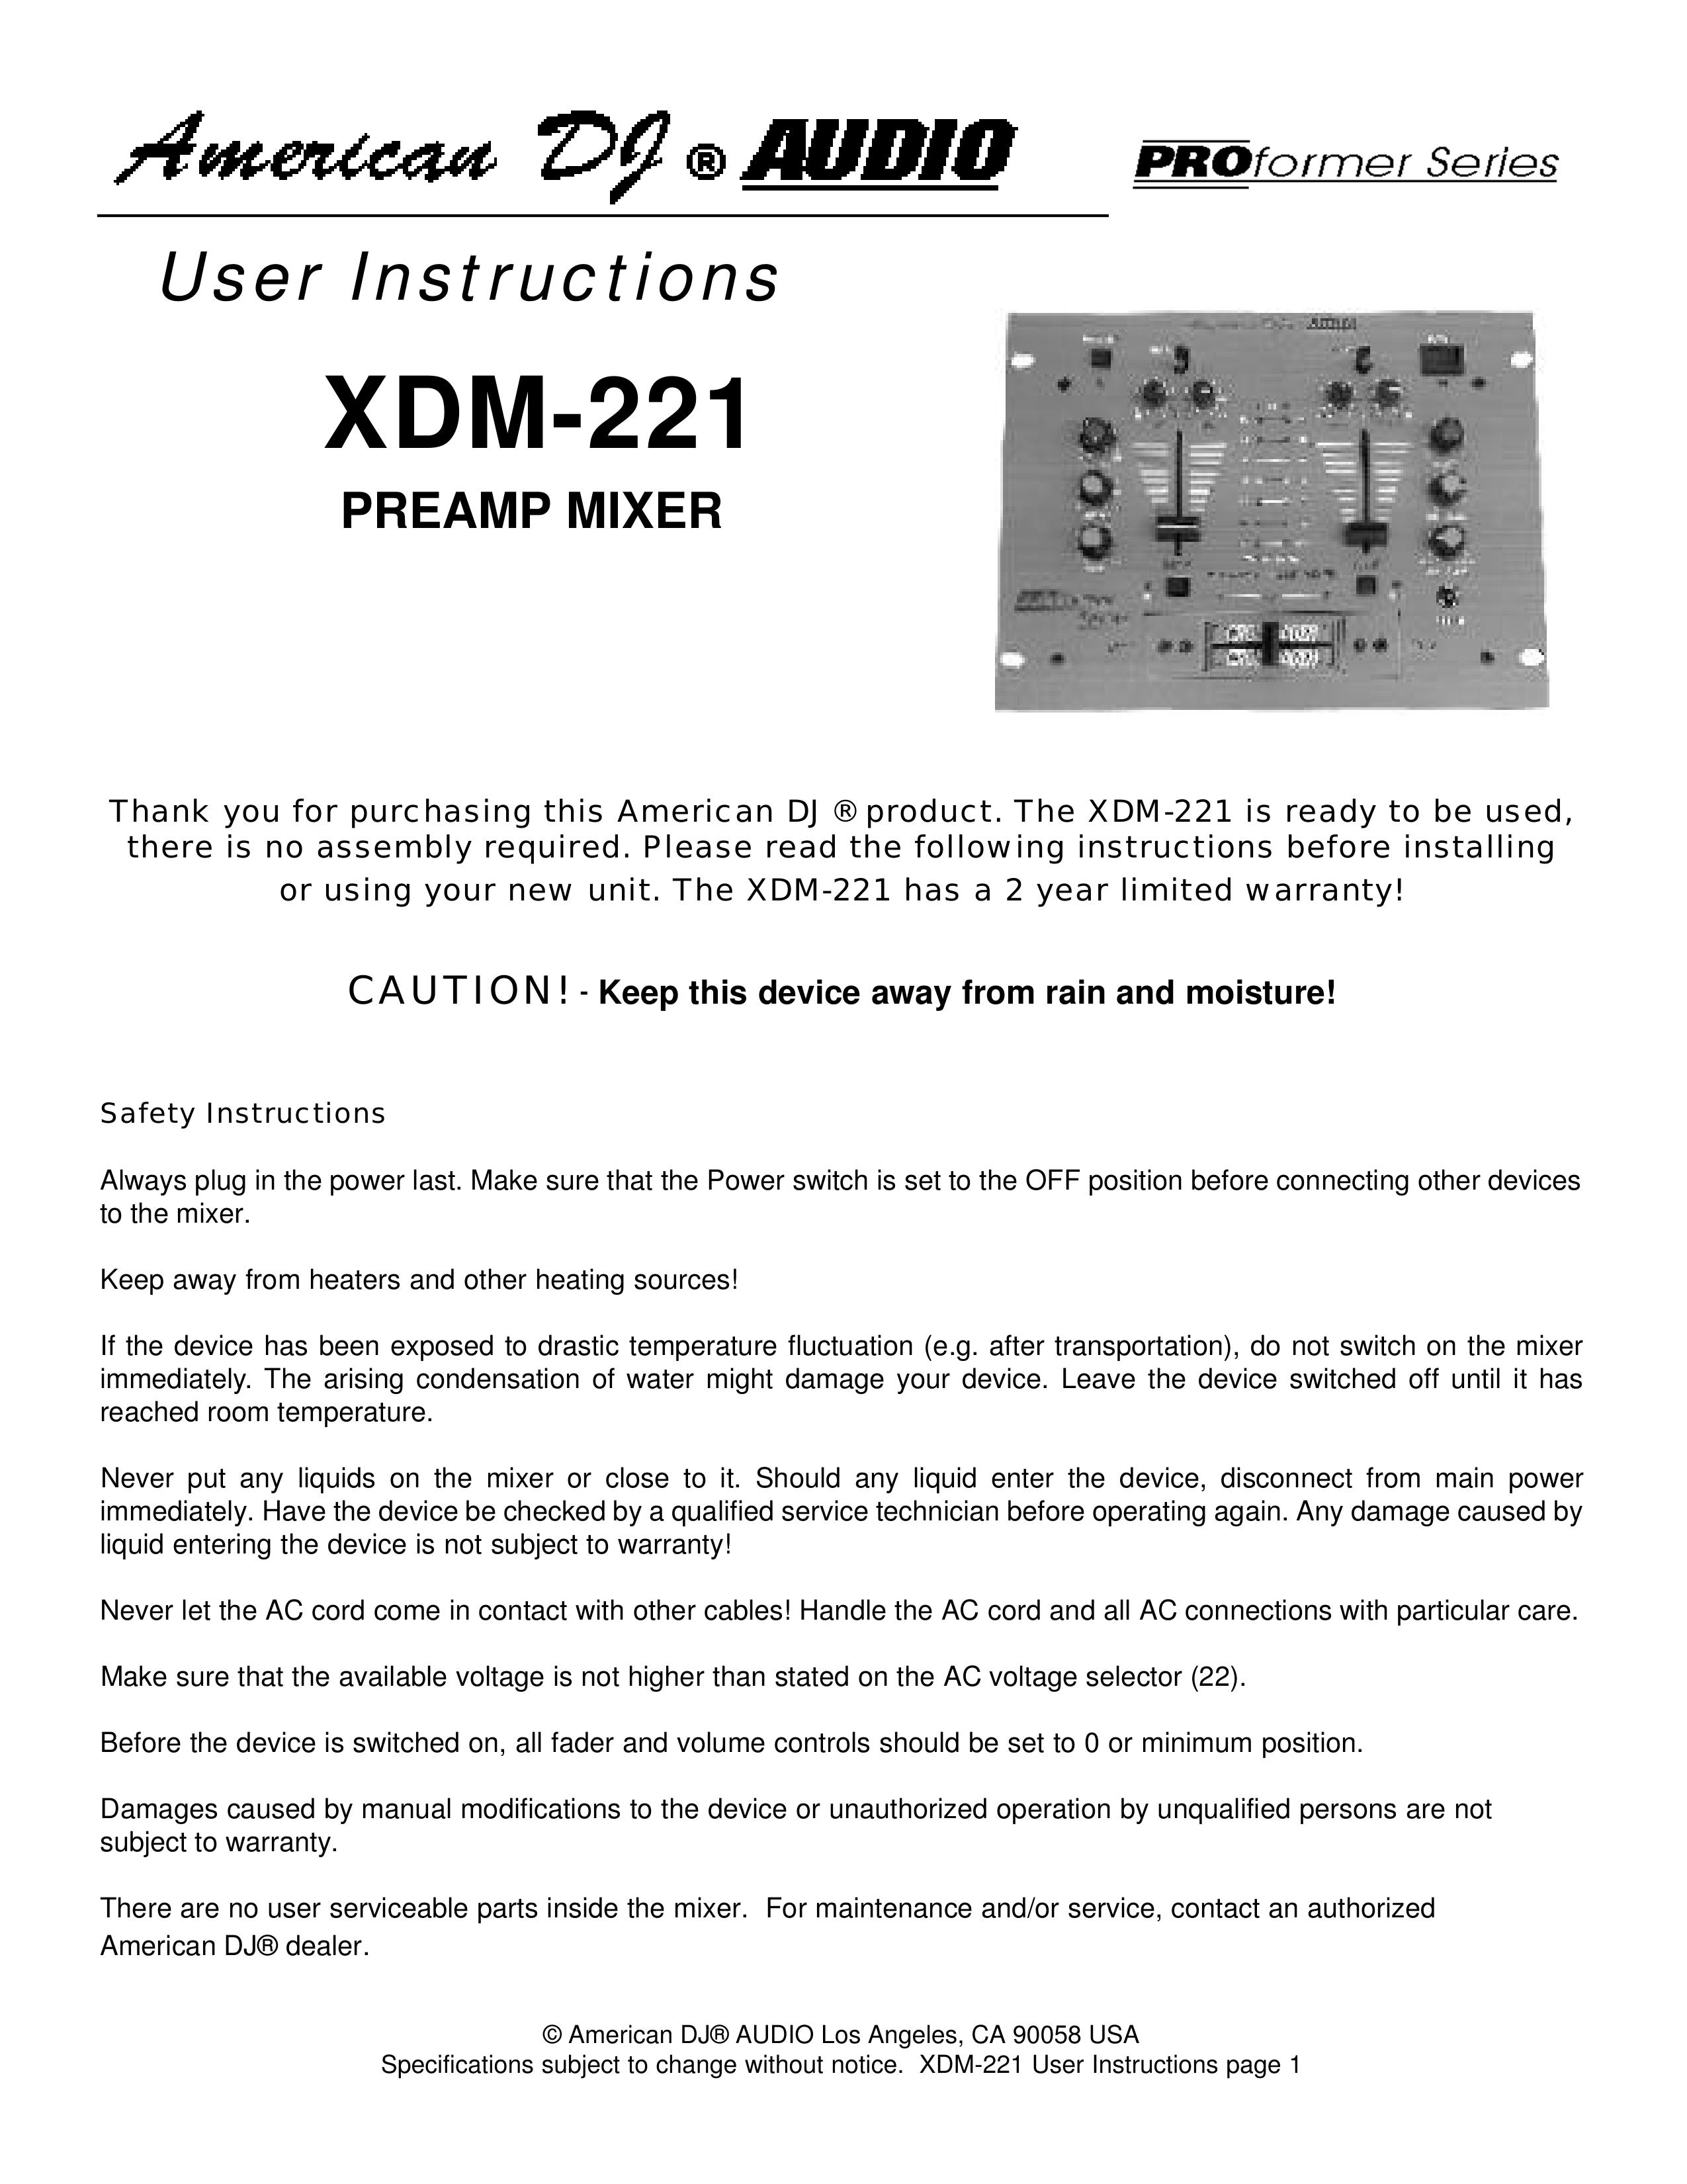 American DJ XDM-221 Music Mixer User Manual (Page 1)